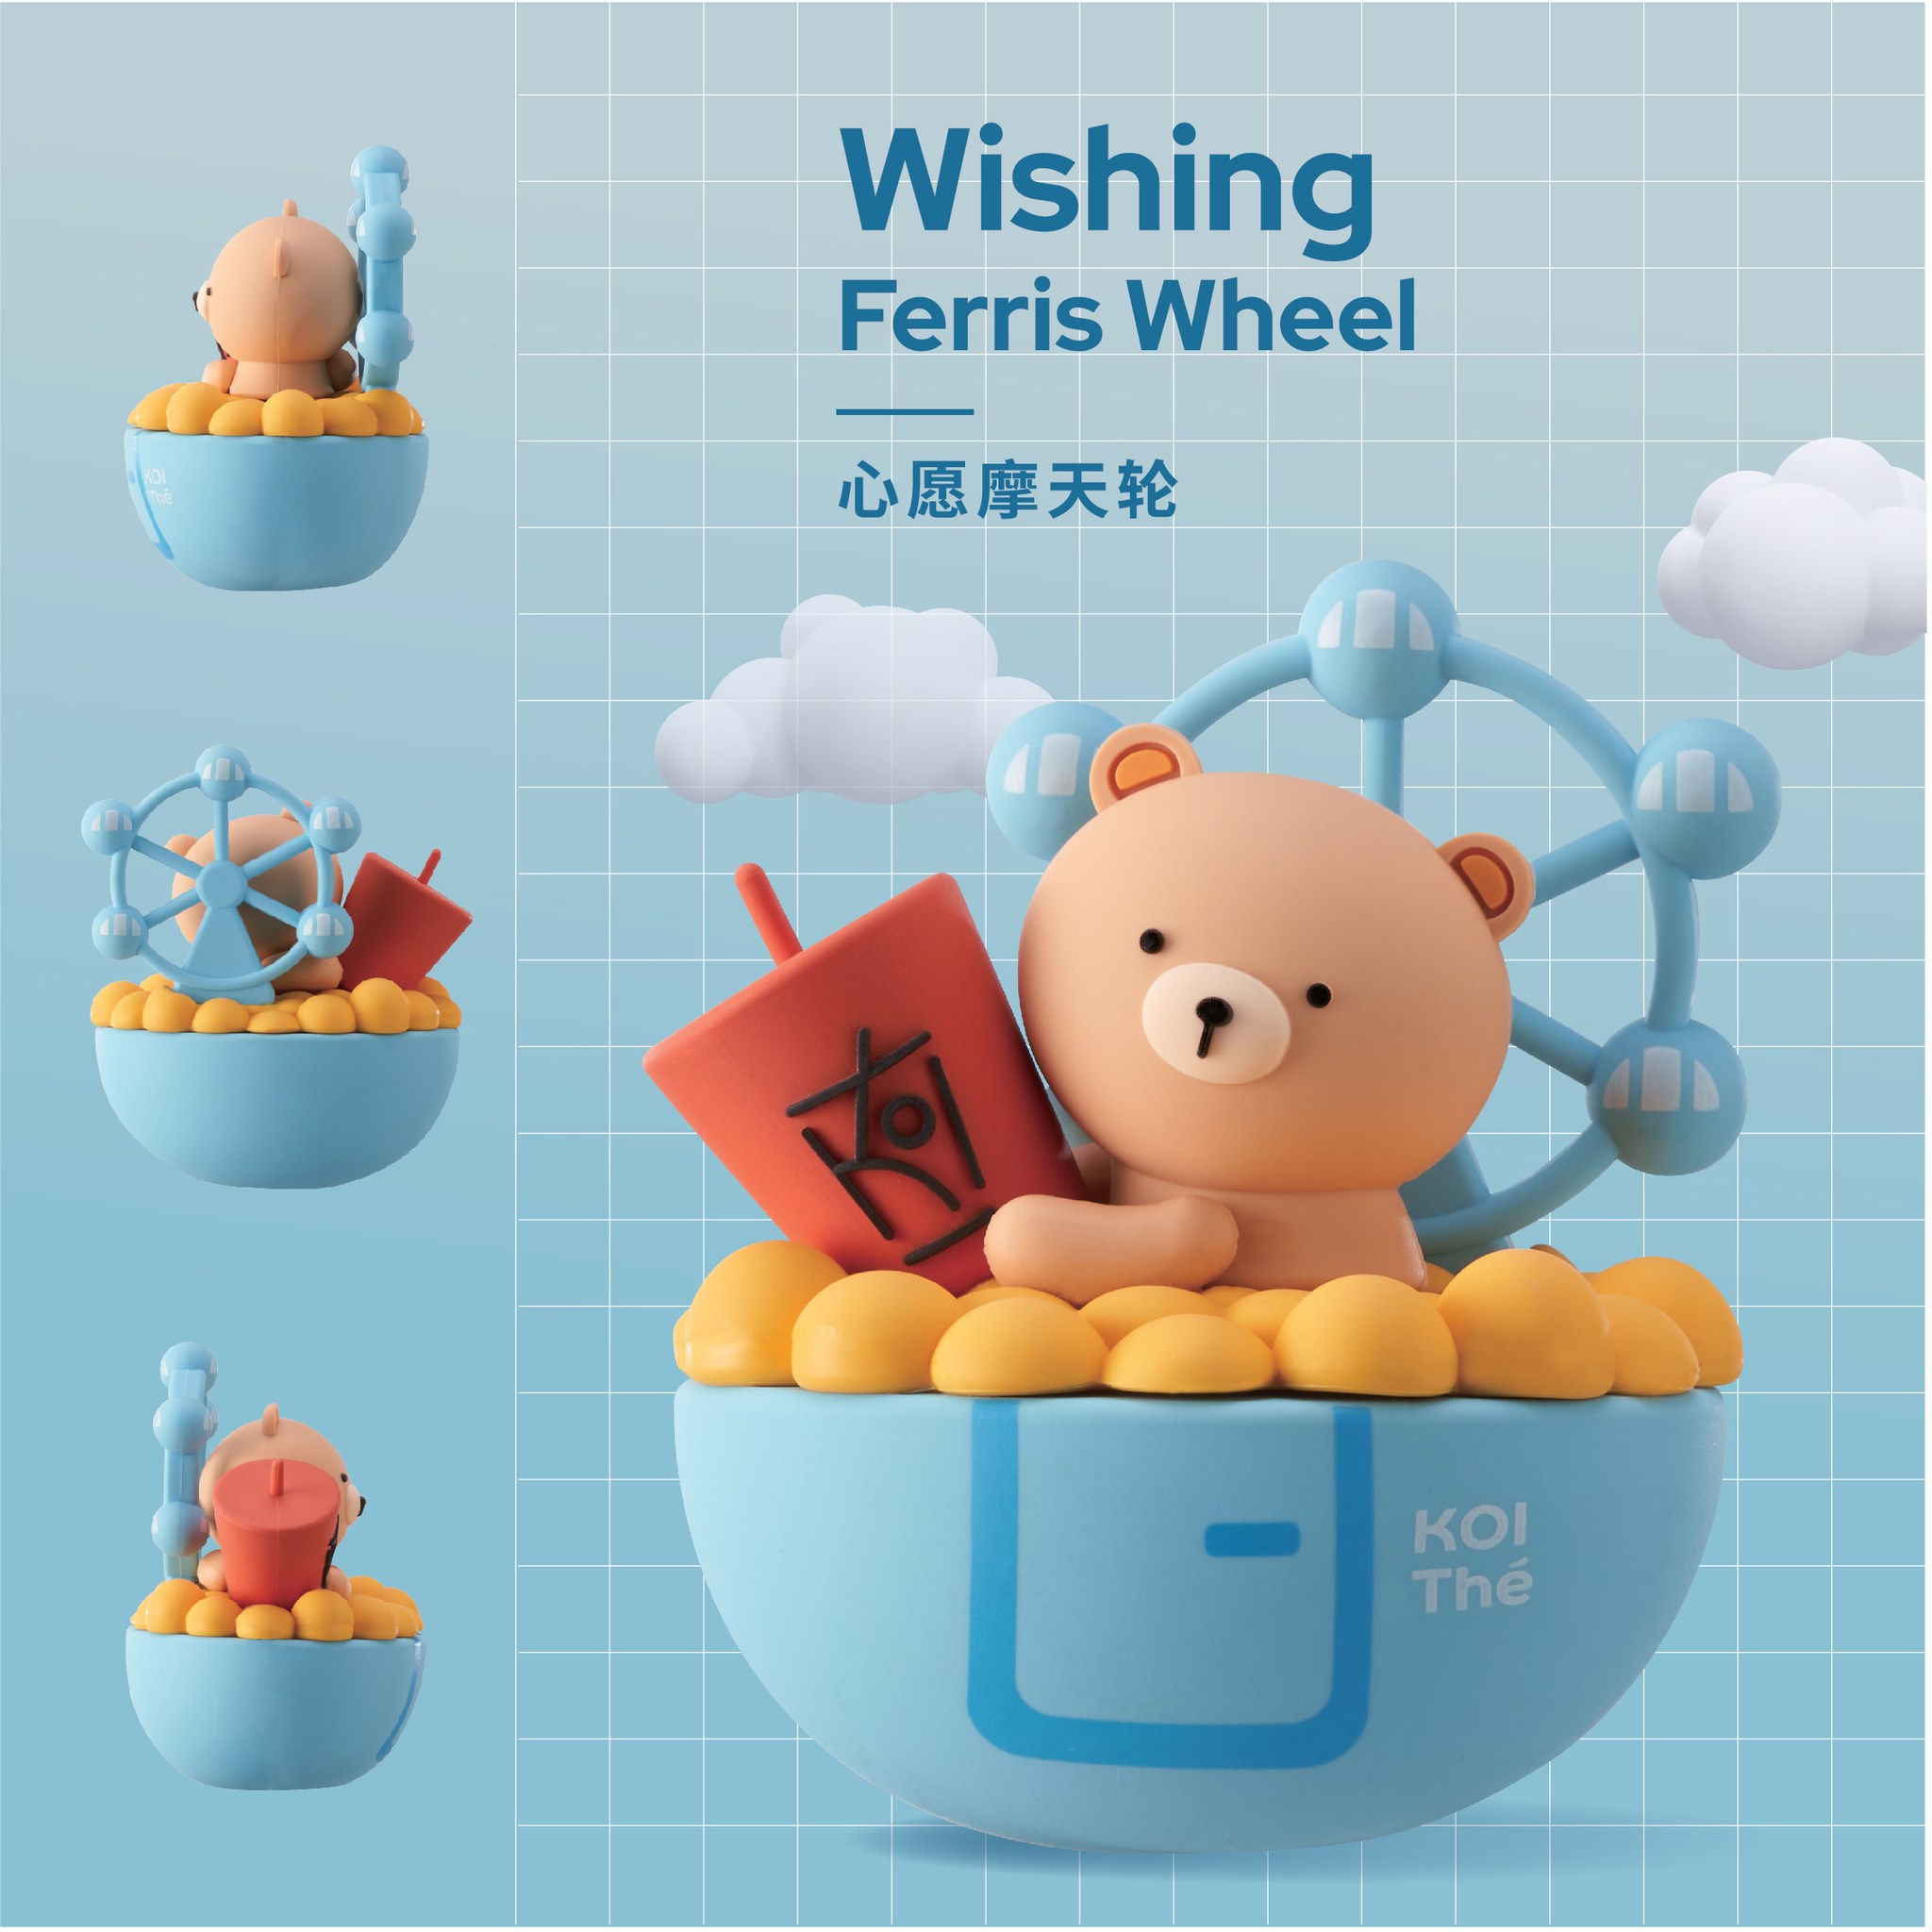 Koi wishing ferris wheel